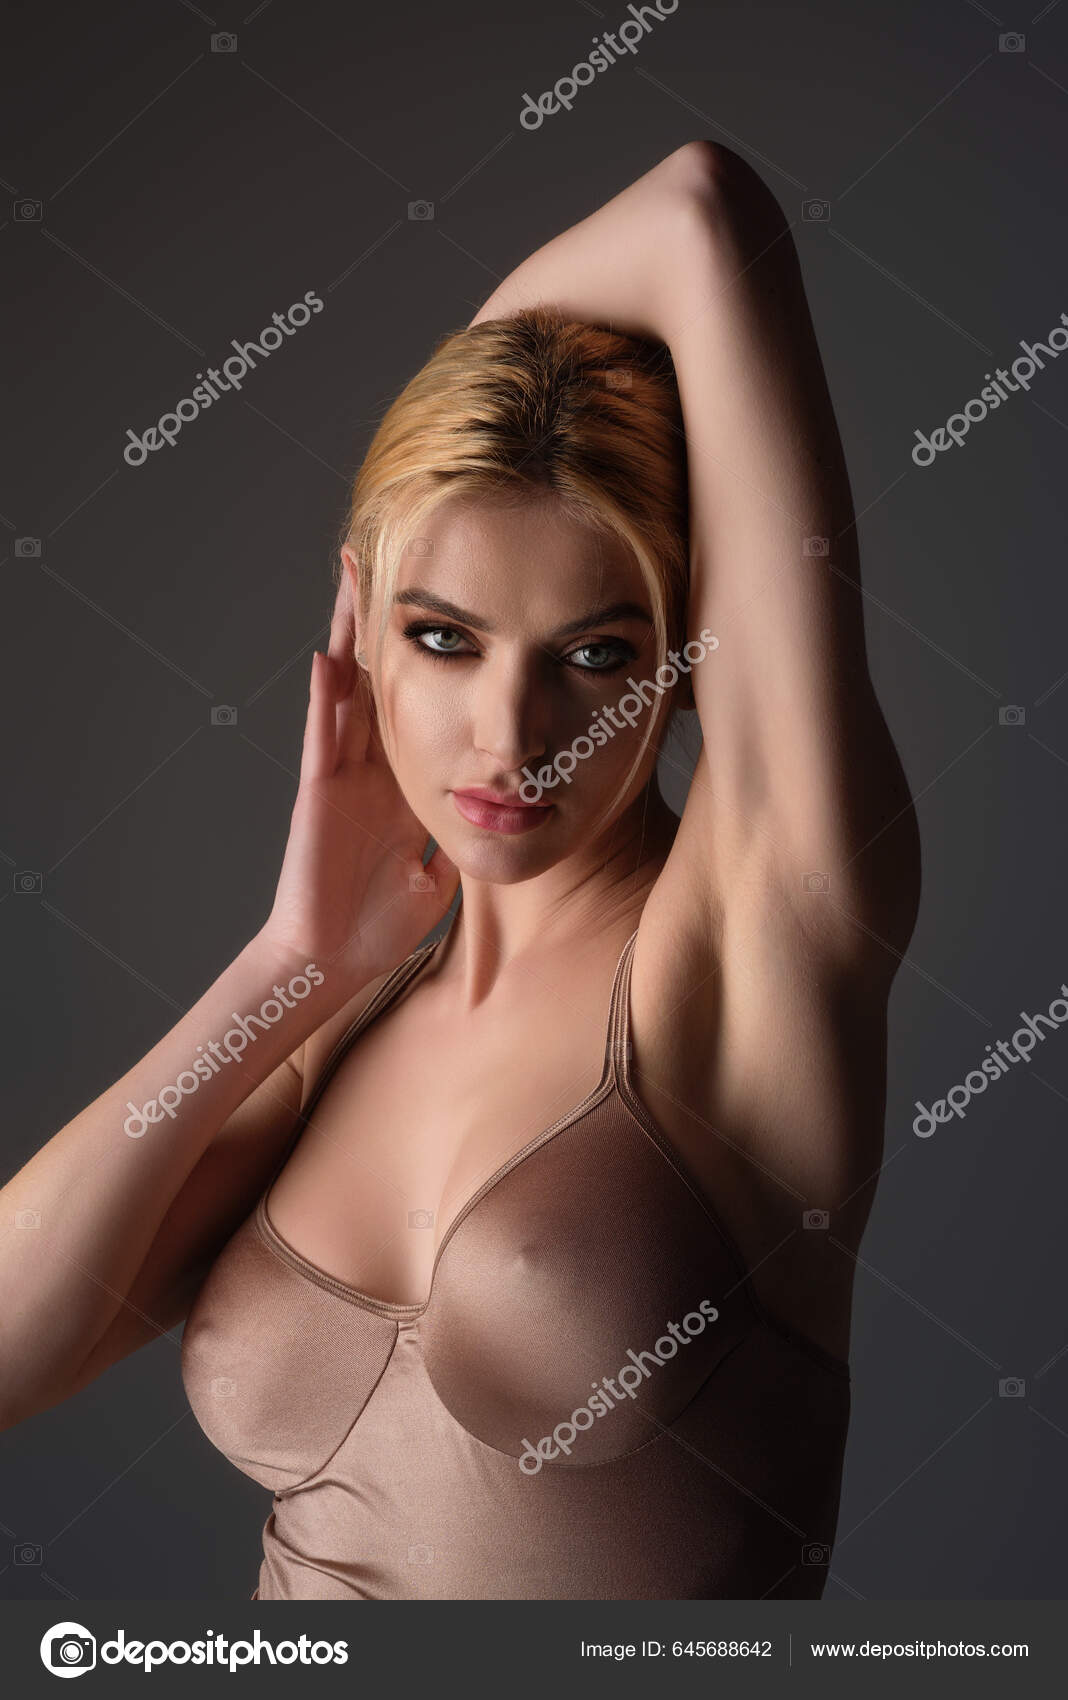 Black Bra Natural Boobs Tits Bra Model Sensual Portrait Elegant